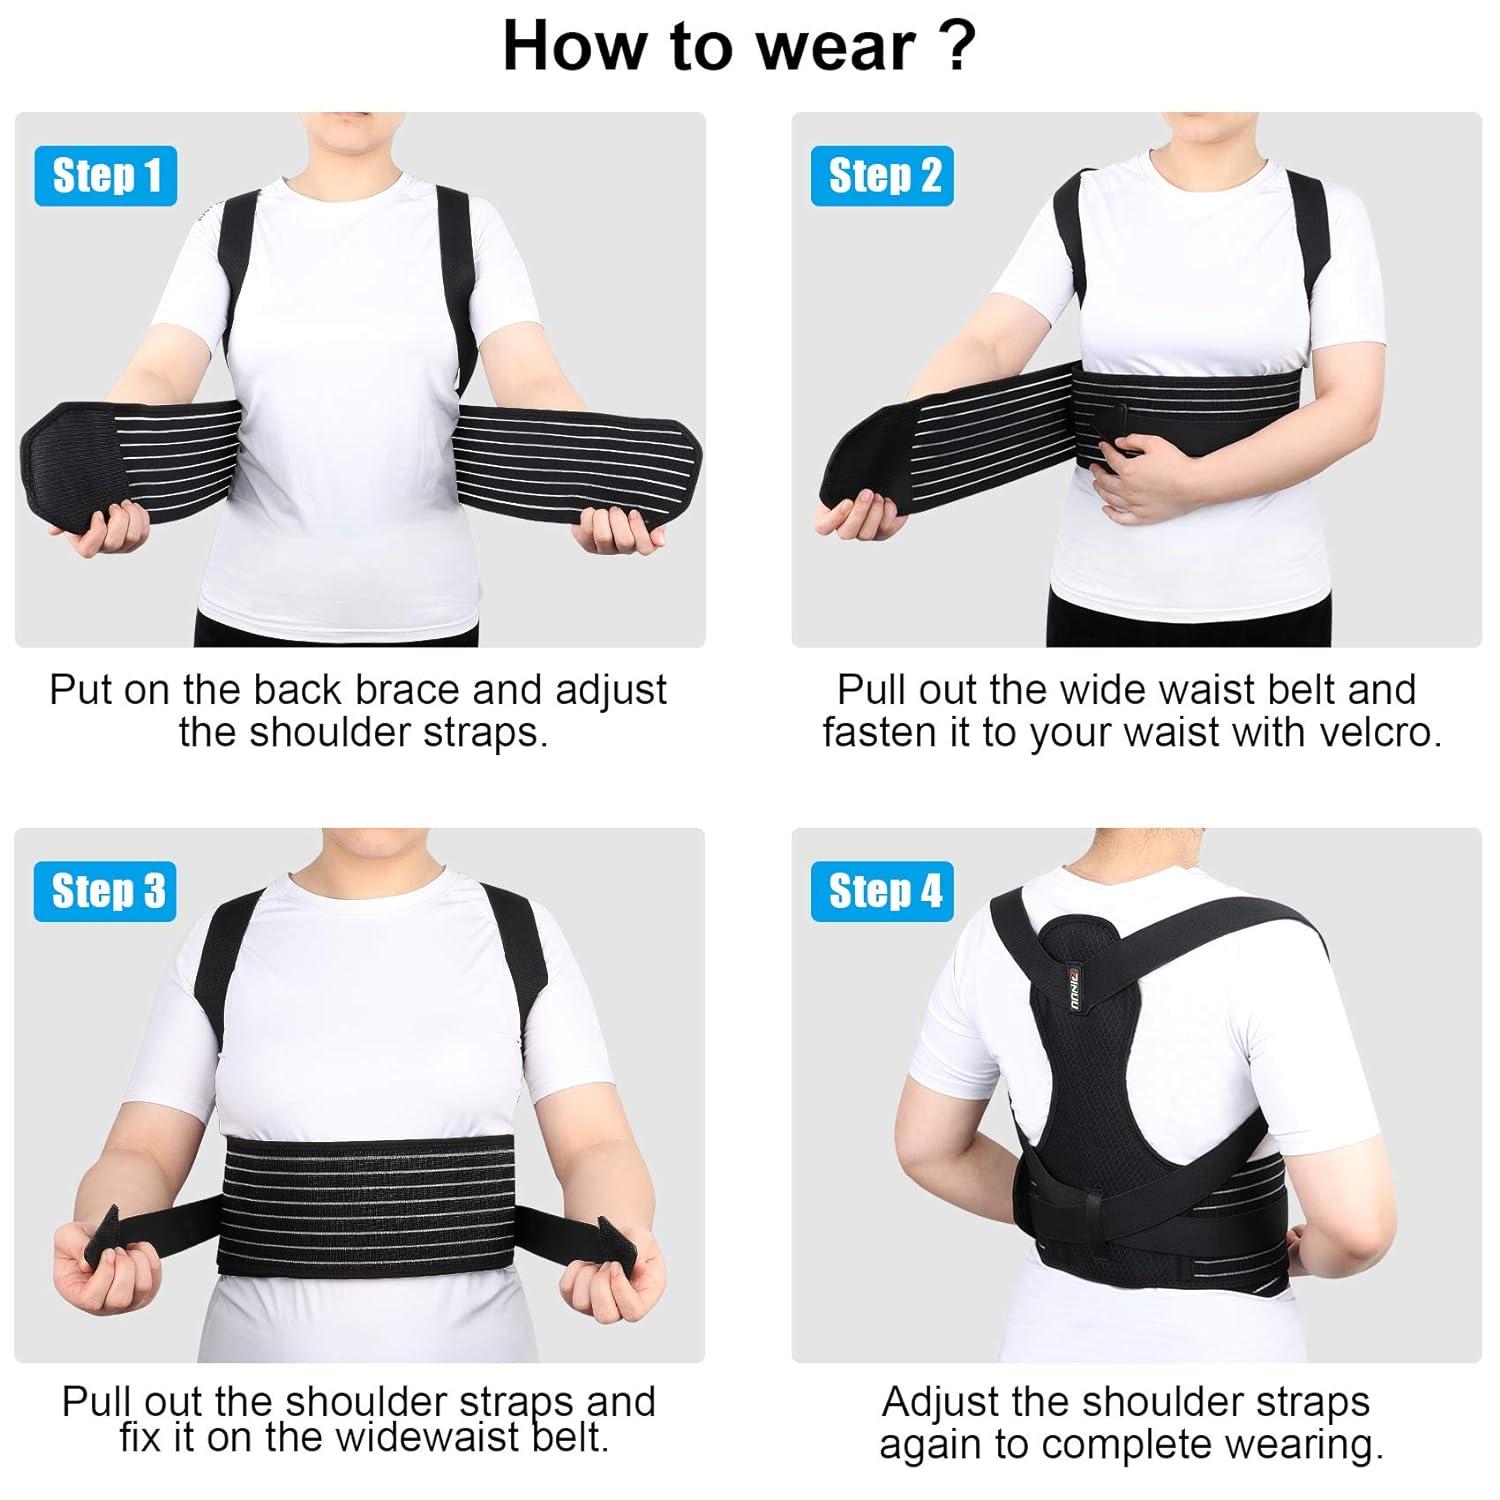 How To Wear The Back Brace 